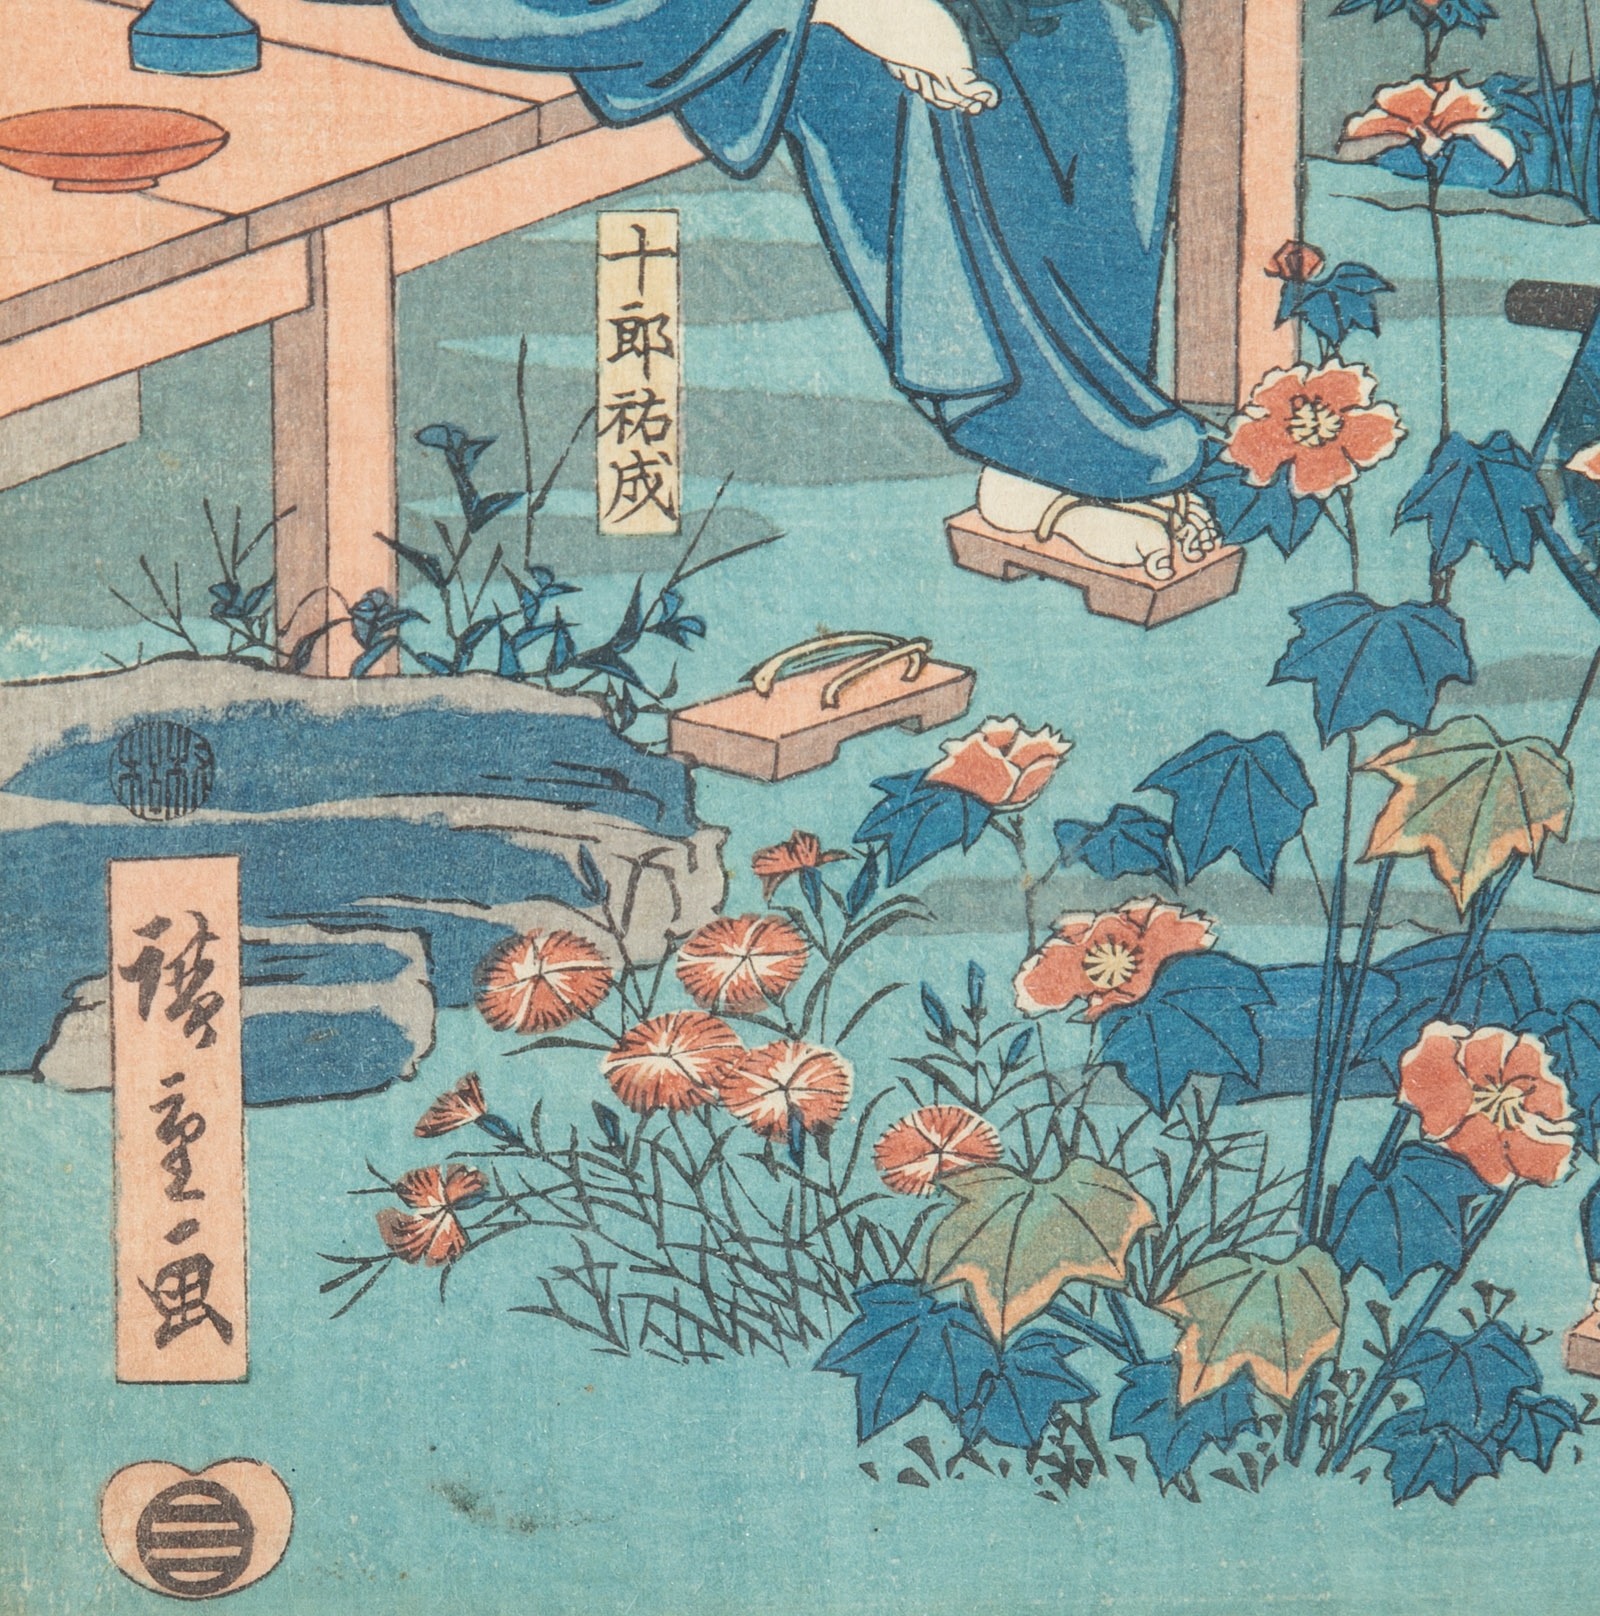 Utagawa Hiroshige, Soga Monogatari Zue